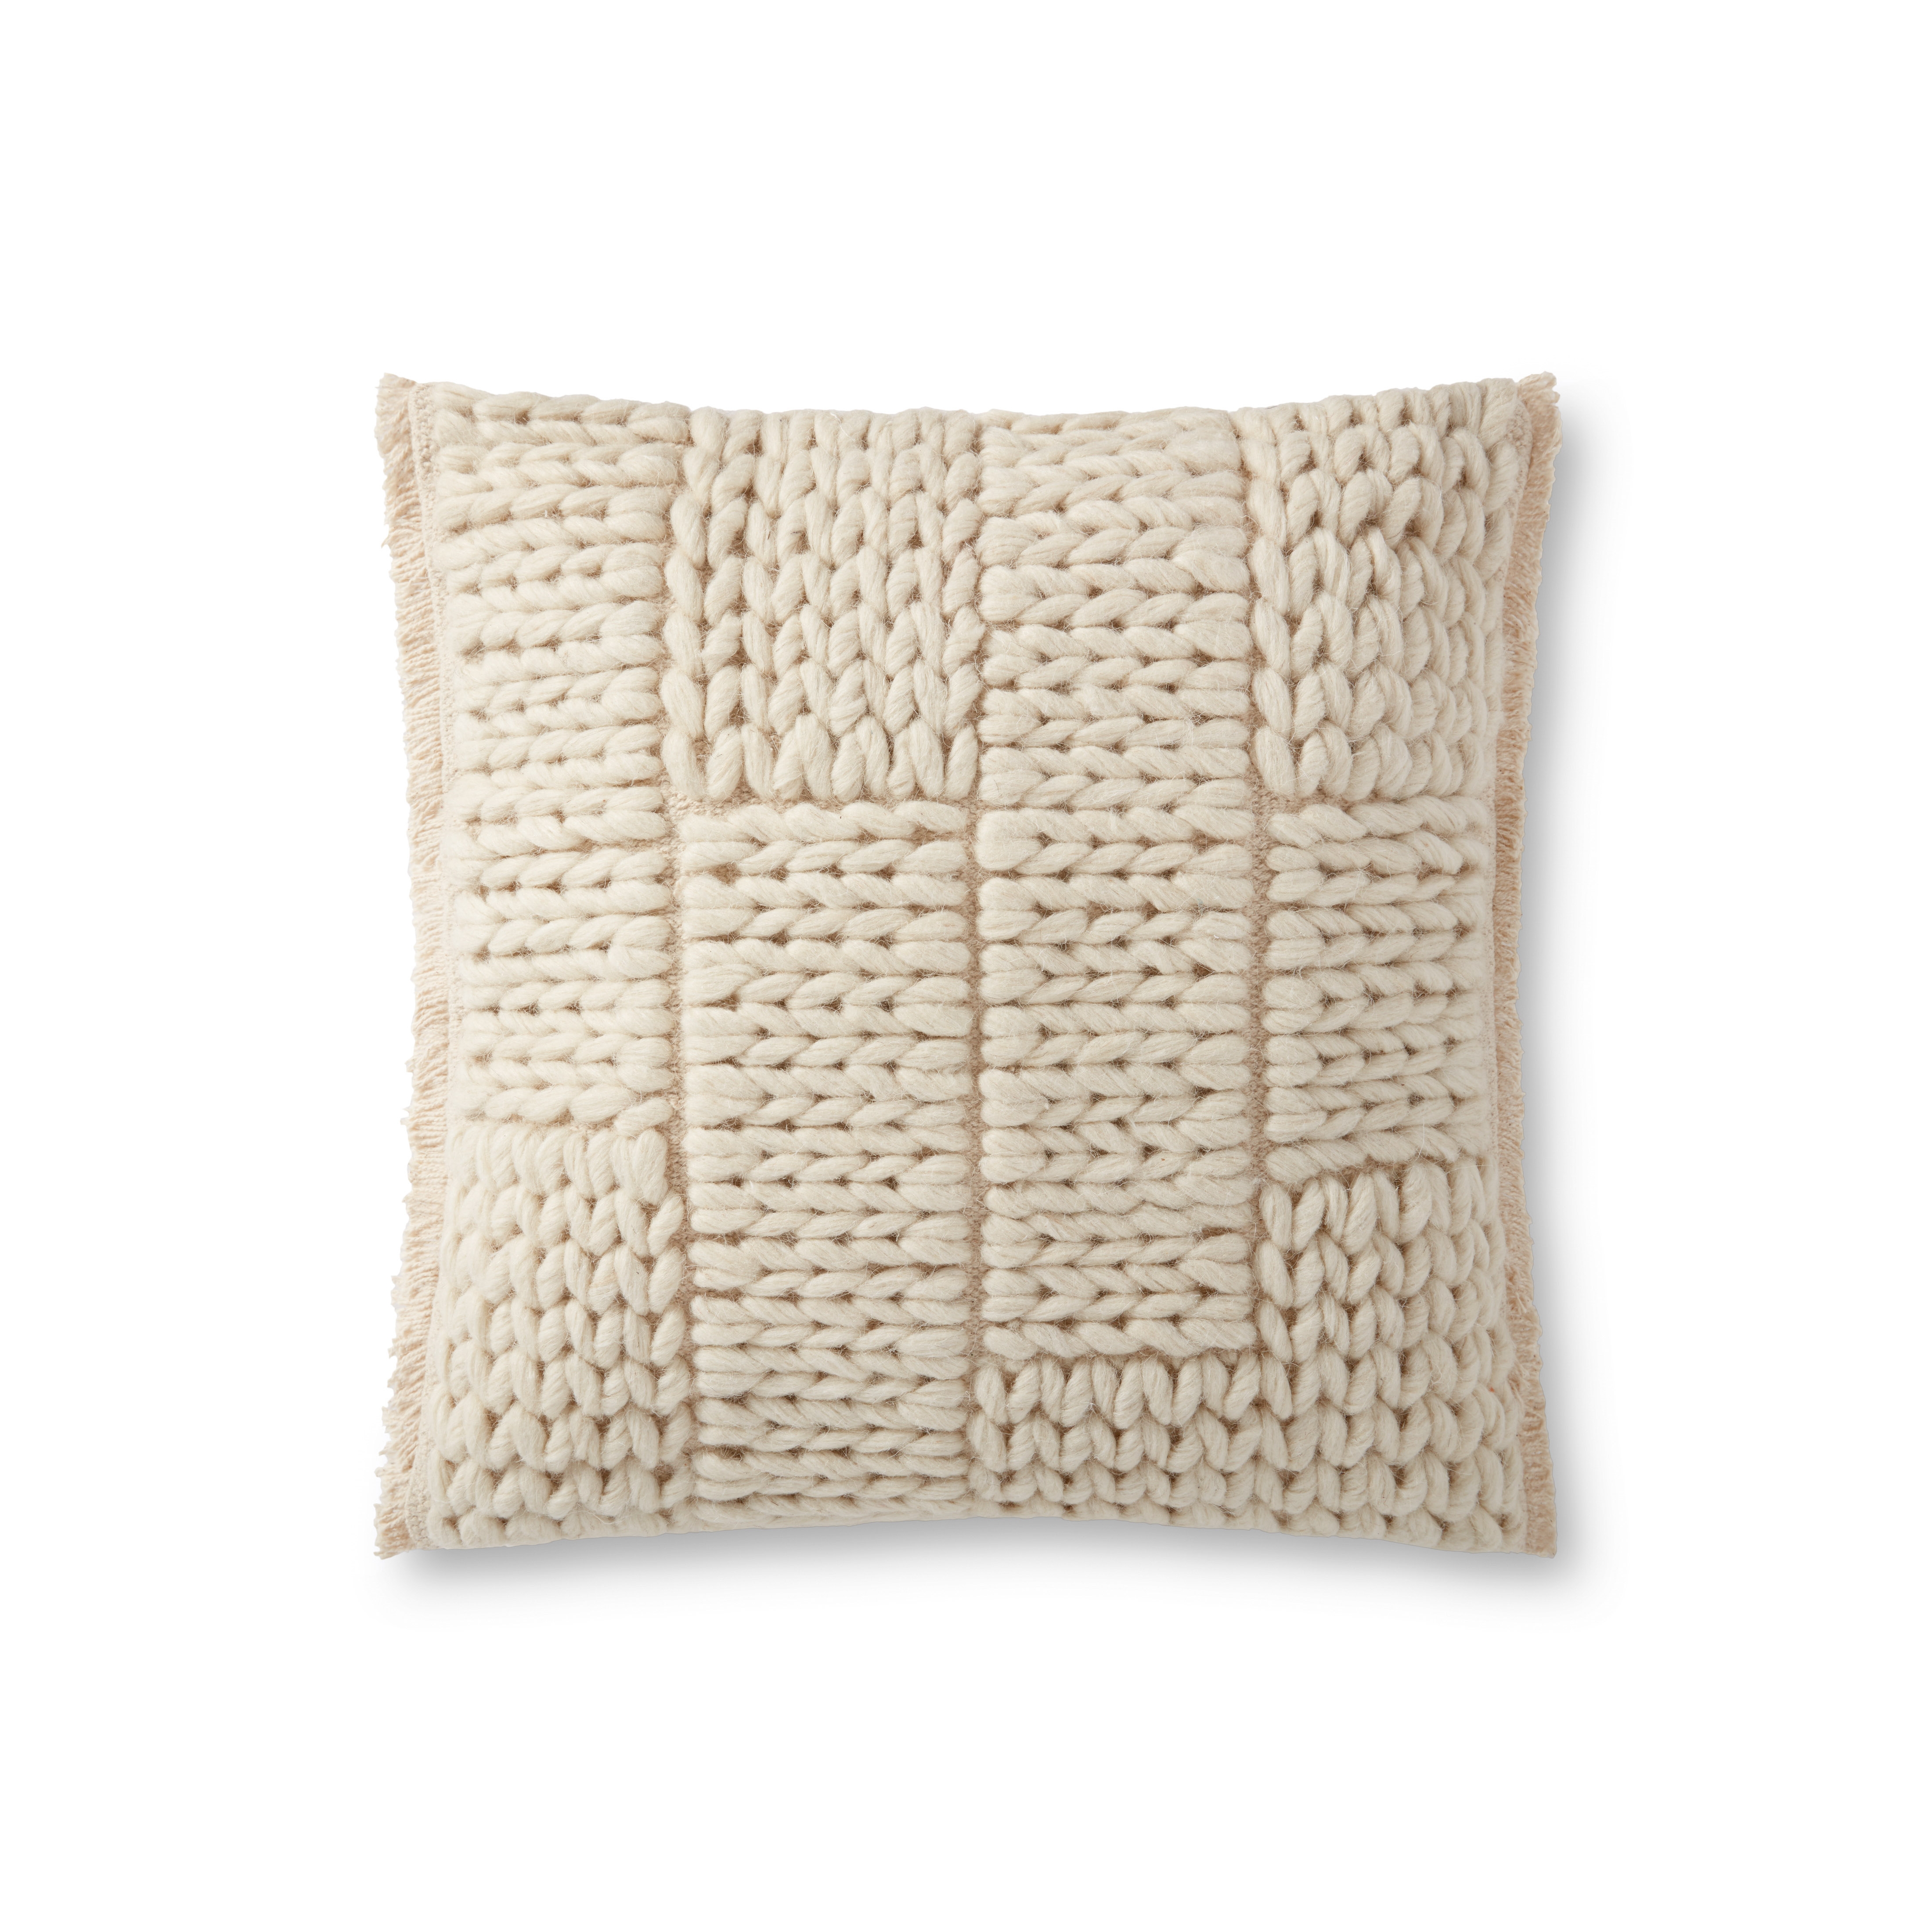 Woven Blocked Throw Pillow, Ivory, 18" x 18" - Image 0